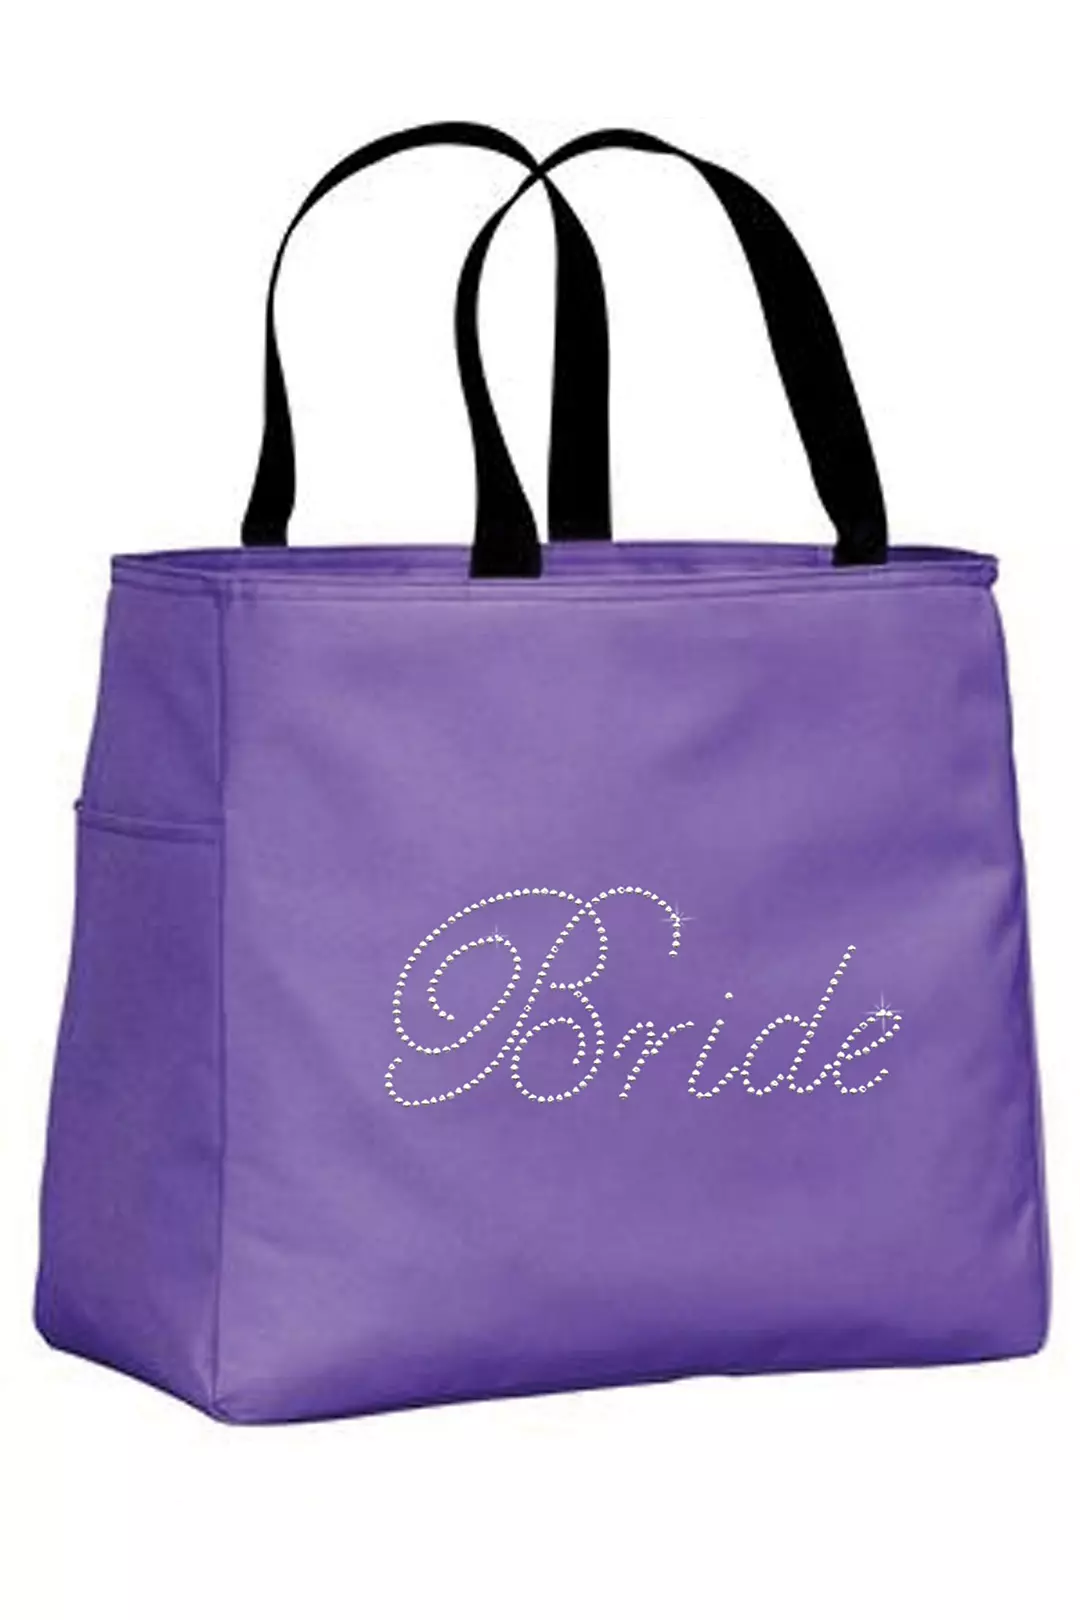 Rhinestone Bride Tote Bag Image